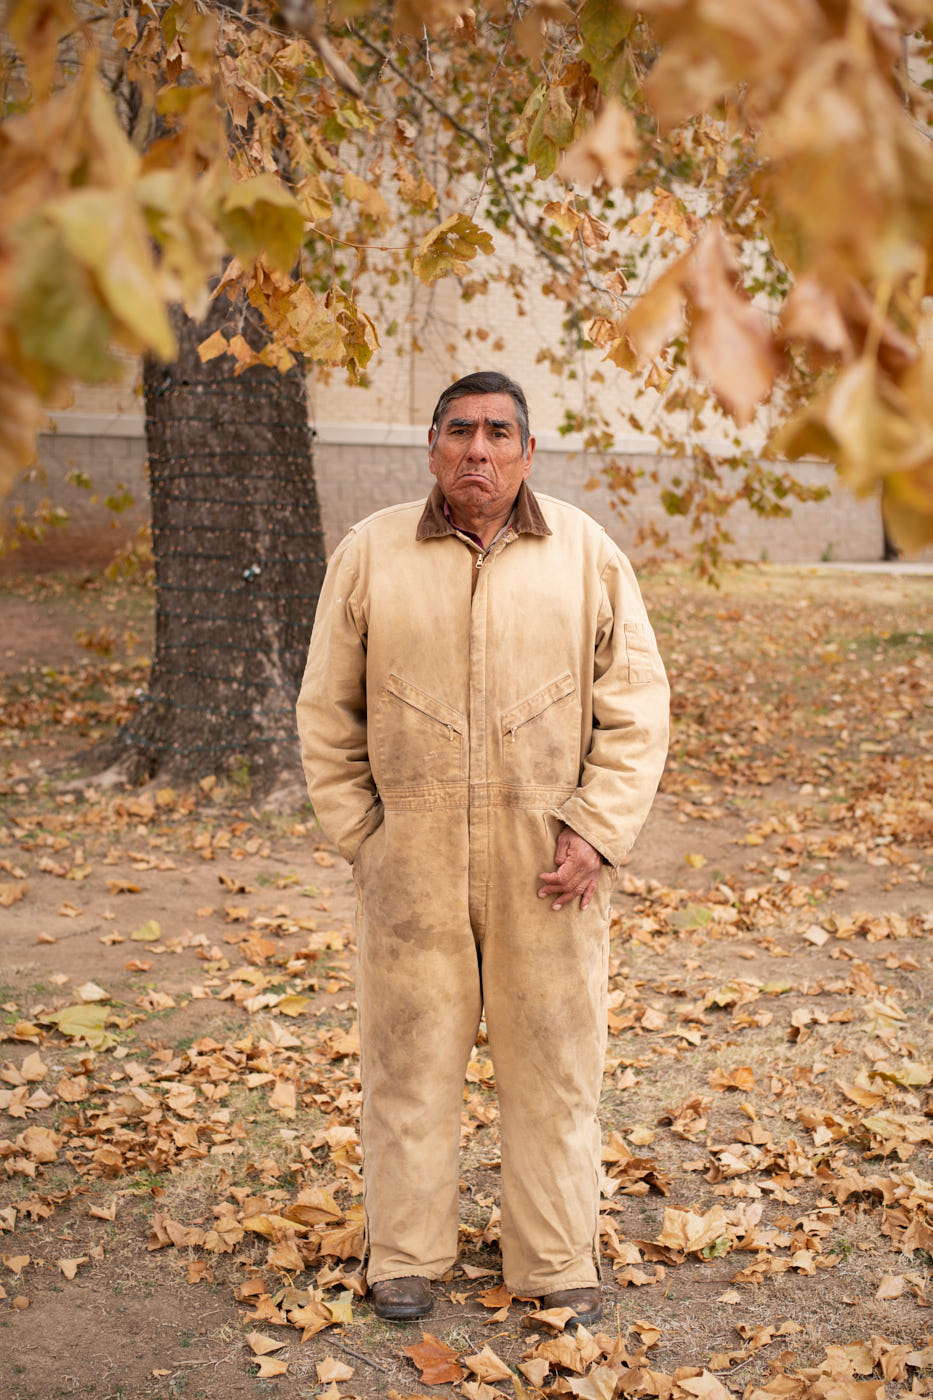 024-worker-brown-suit-portrait